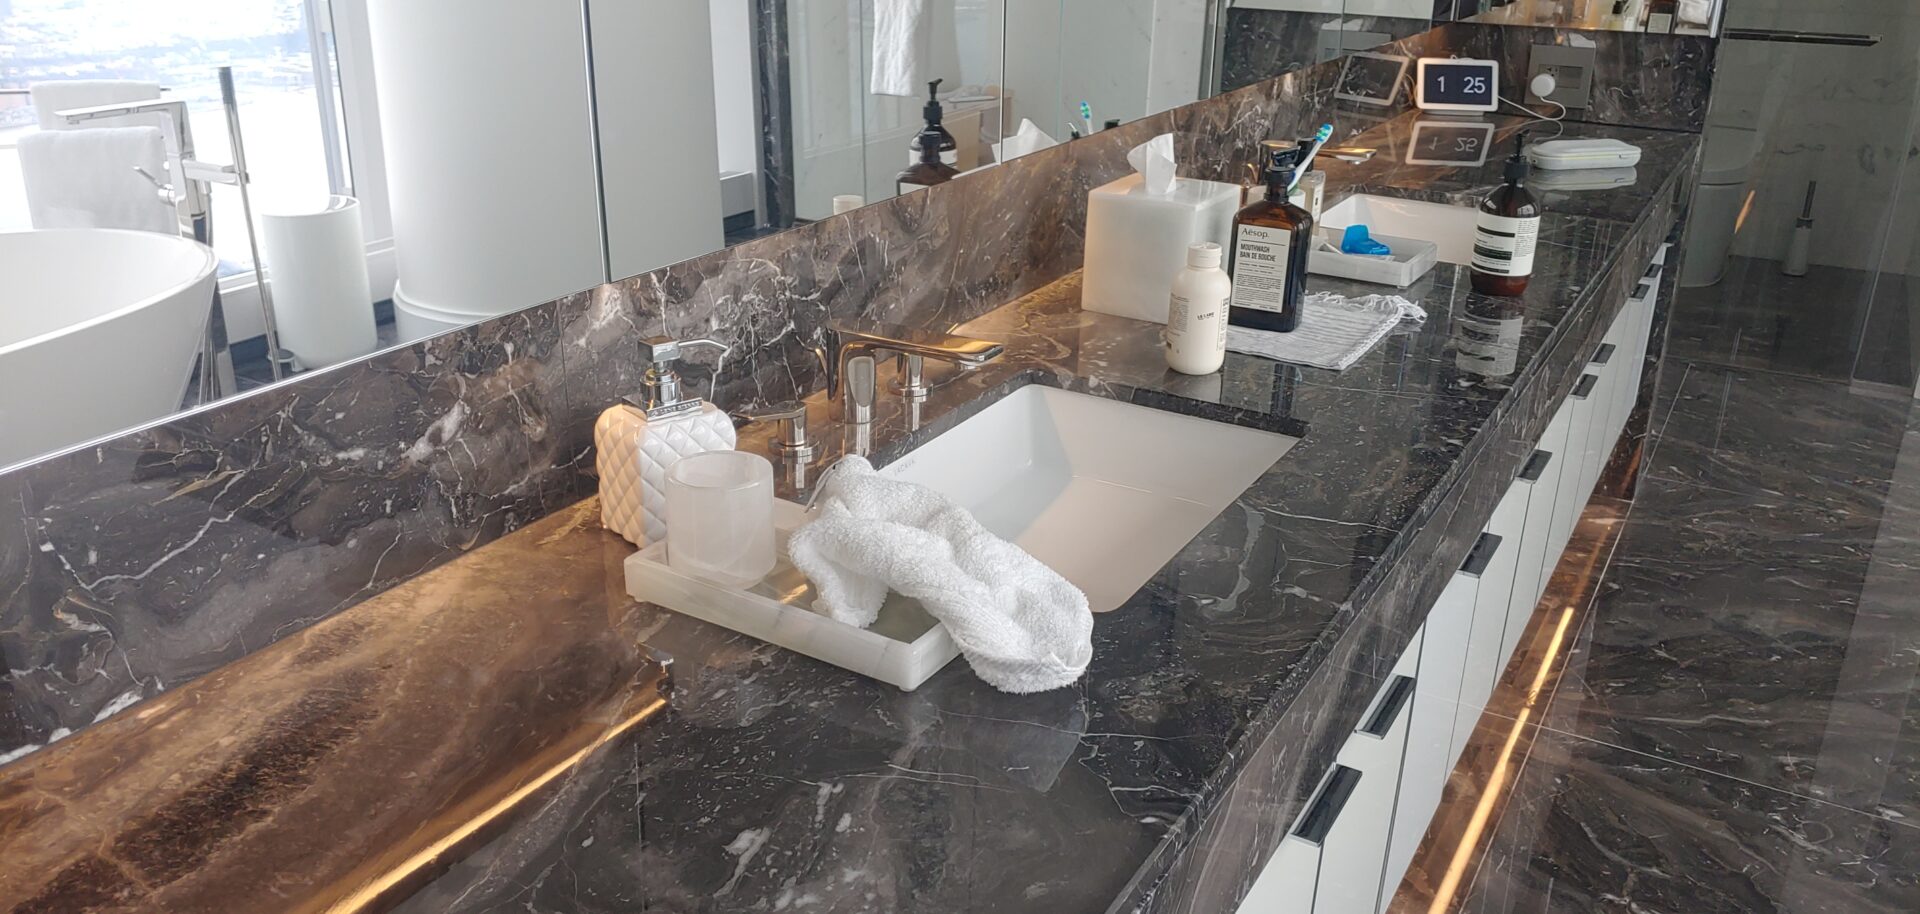 A marble bathroom countertop